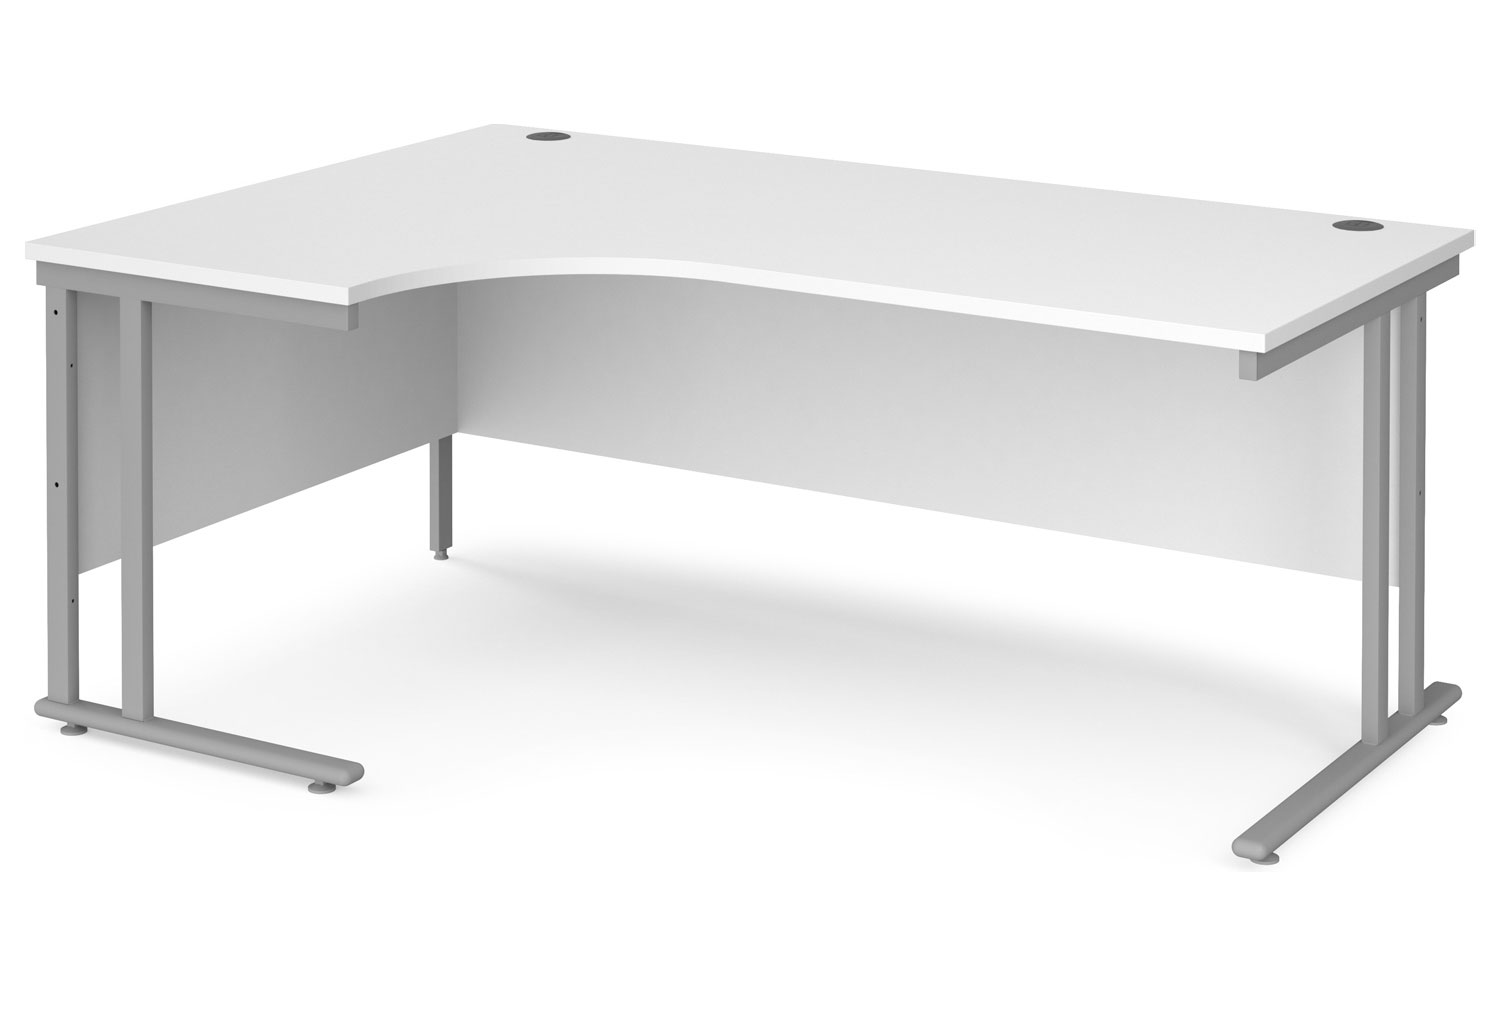 Value Line Deluxe C-Leg Left Hand Ergonomic Office Desk (Silver Legs), 180wx120/80dx73h (cm), White, Express Delivery